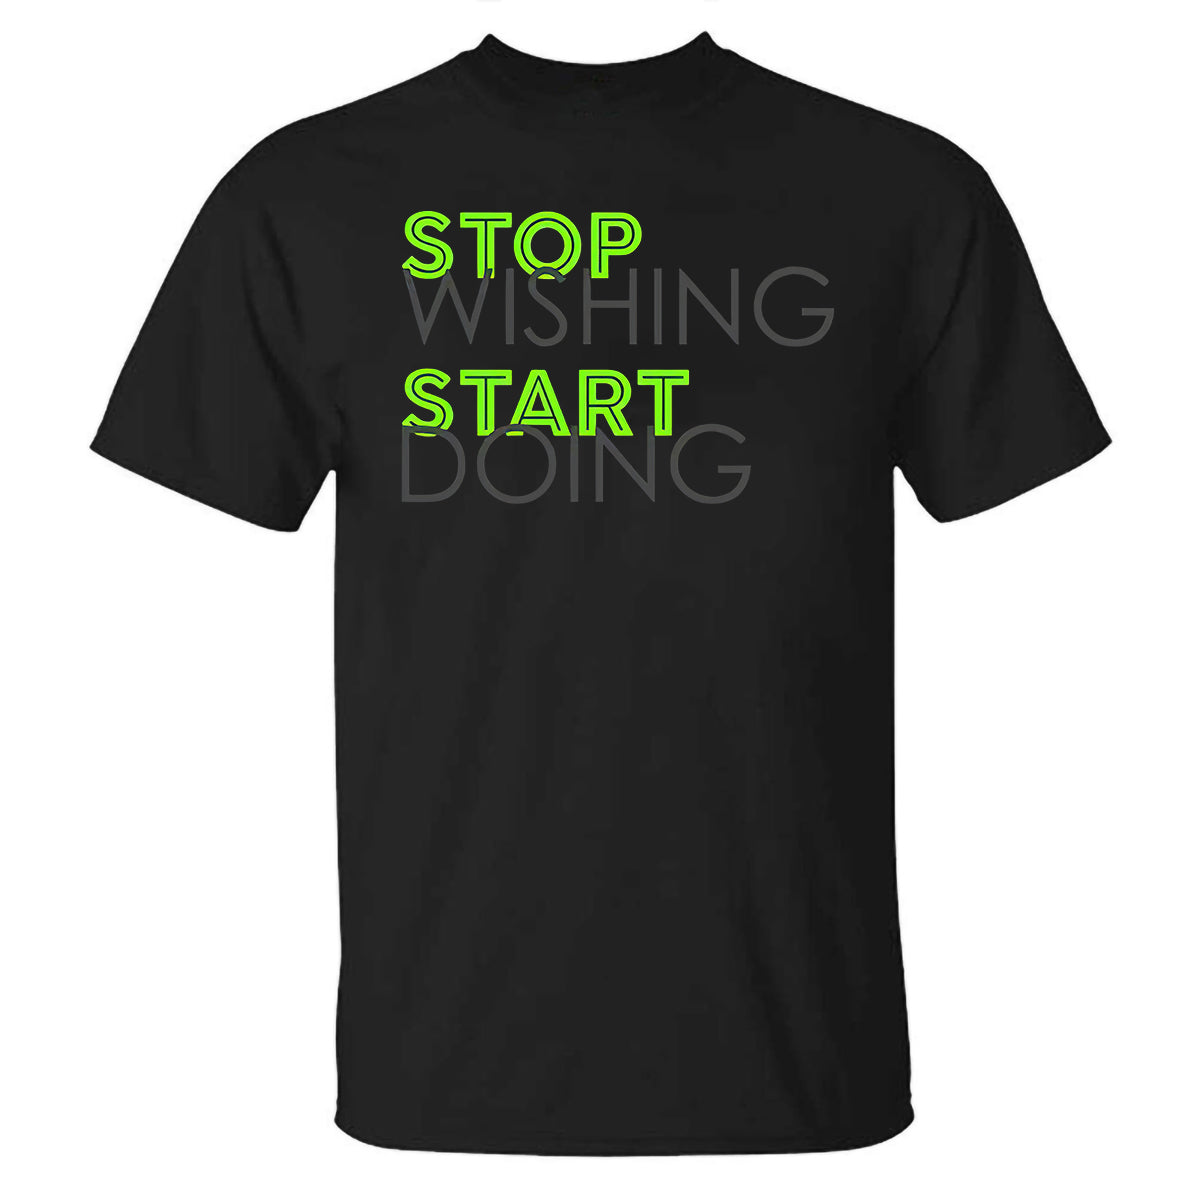 Stop Wishing Start Doing Printed T-shirt